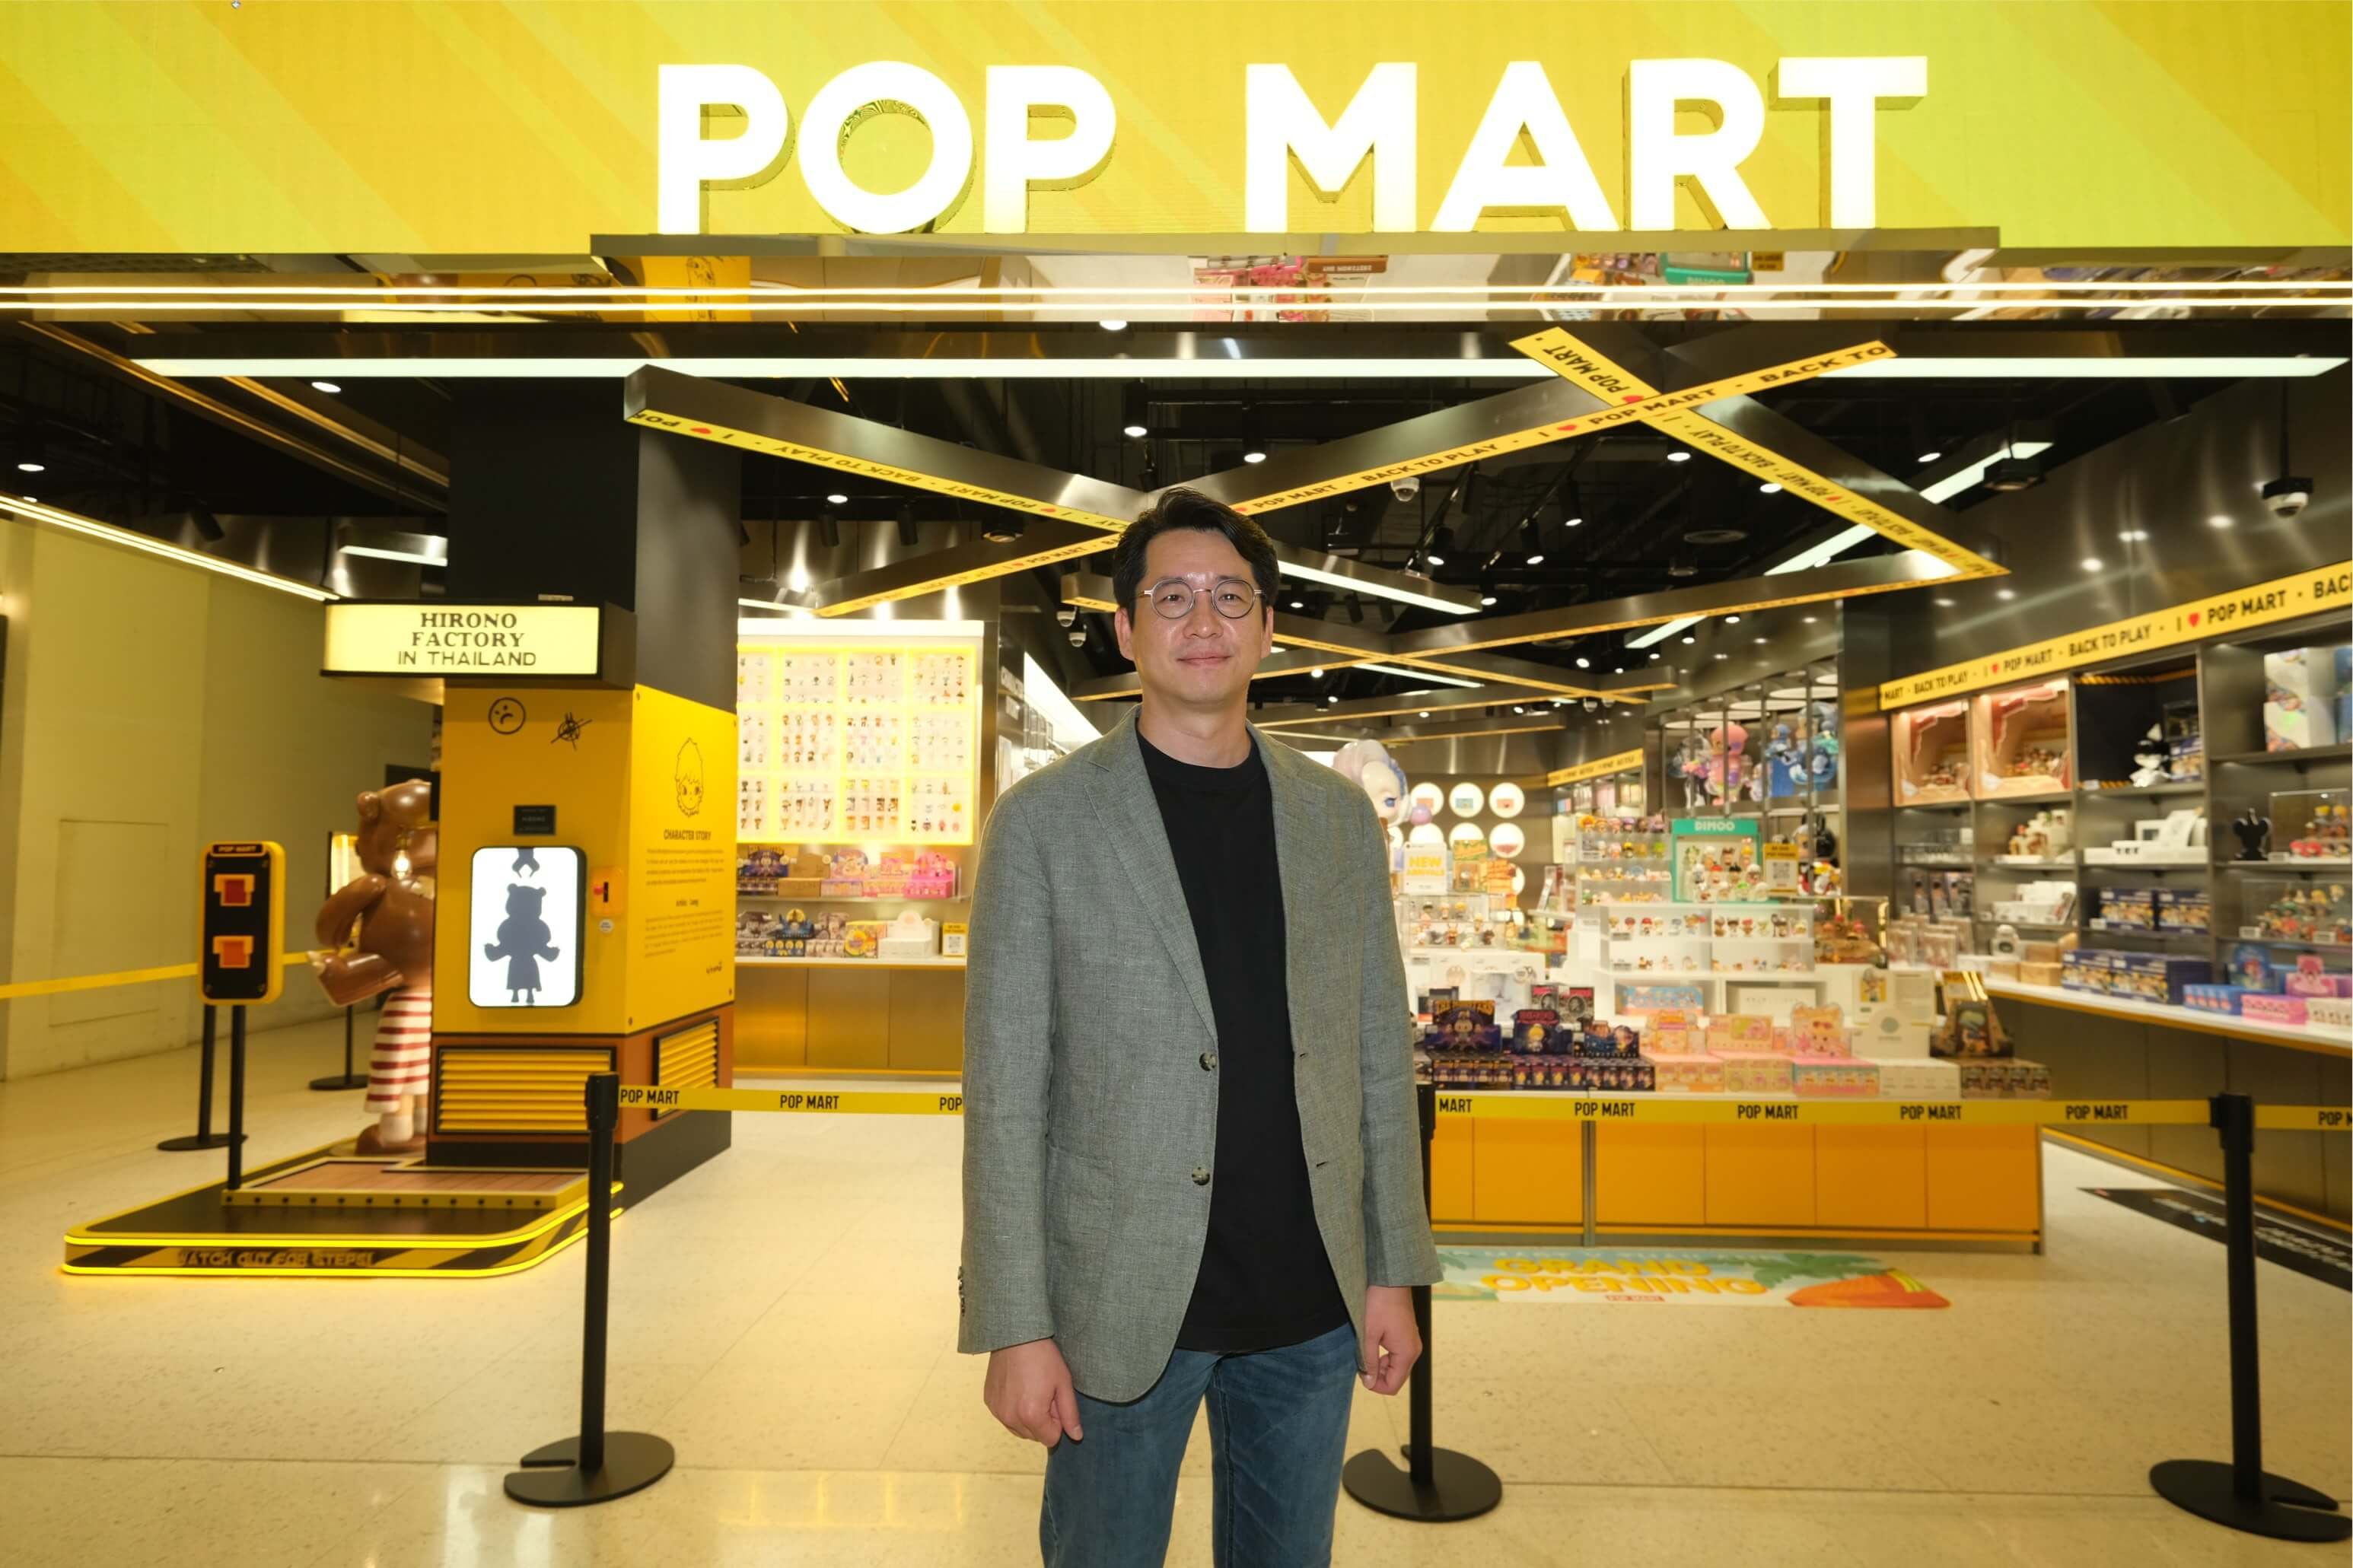 POP MART กับกลยุทธ์การตลาดอาร์ตทอยส์ เจาะคนรุ่นใหม่ สู่ผู้นำระดับโลก